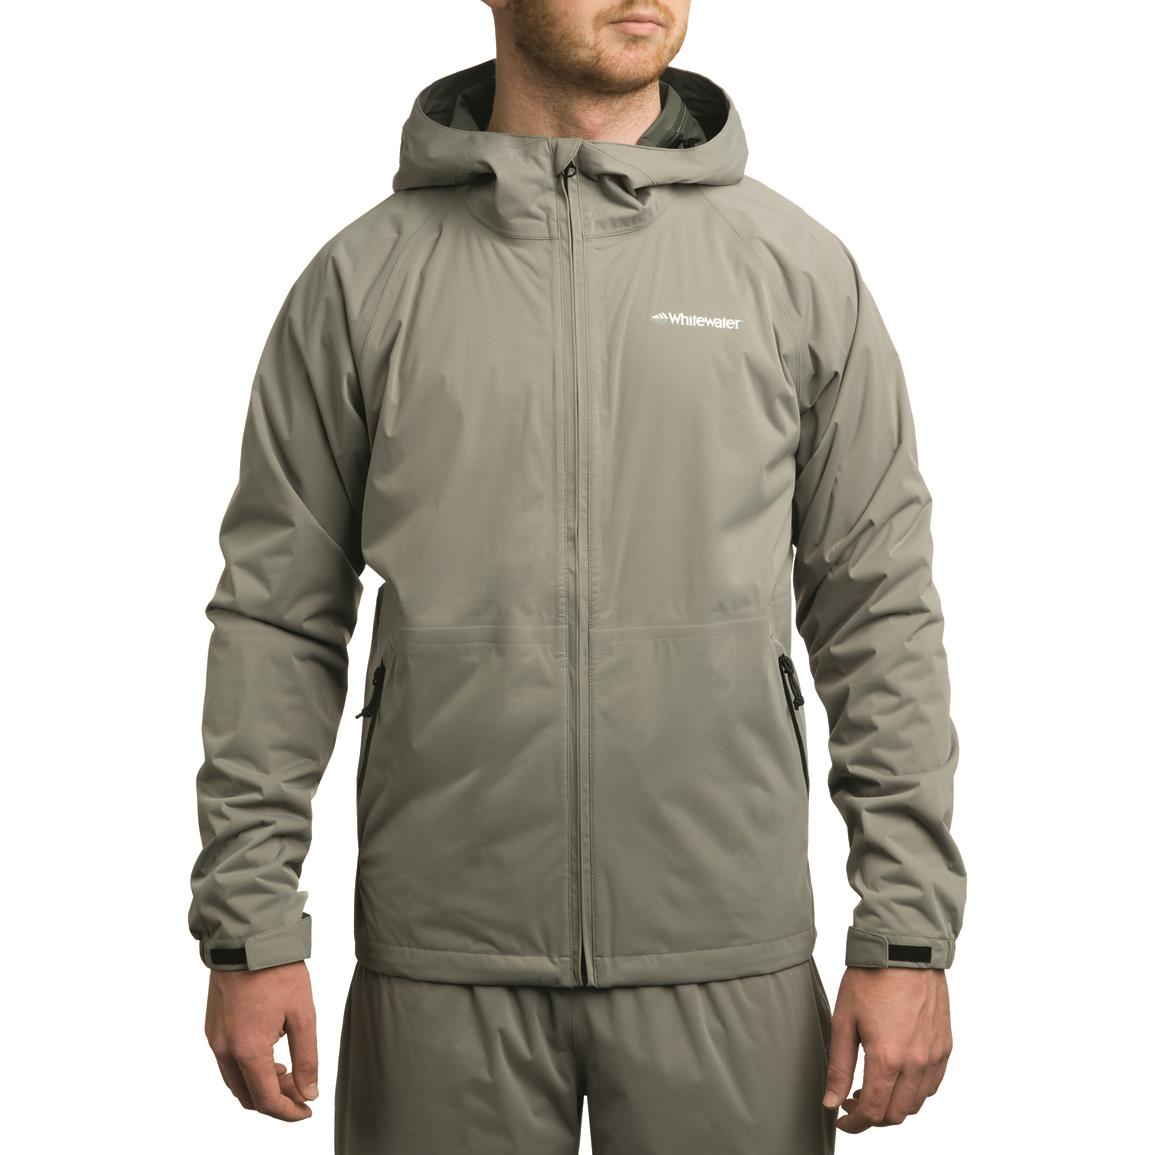 Whitewater Men's Waterproof Packable Rain Jacket, Steel Gray